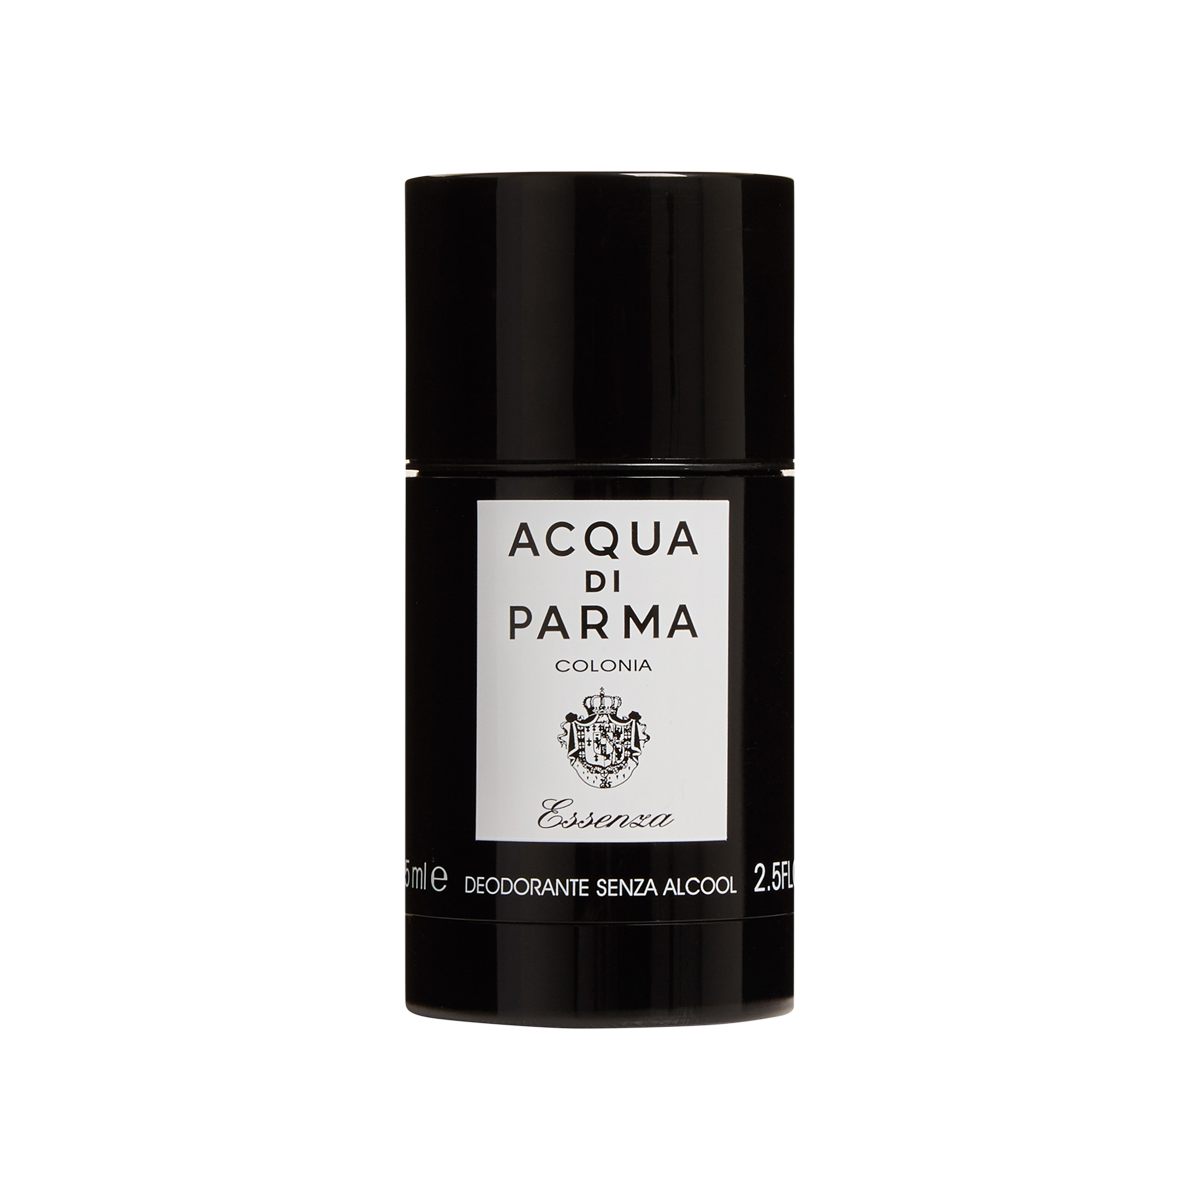 Acqua di Parma - Colonia Essenza Deodorant Stick